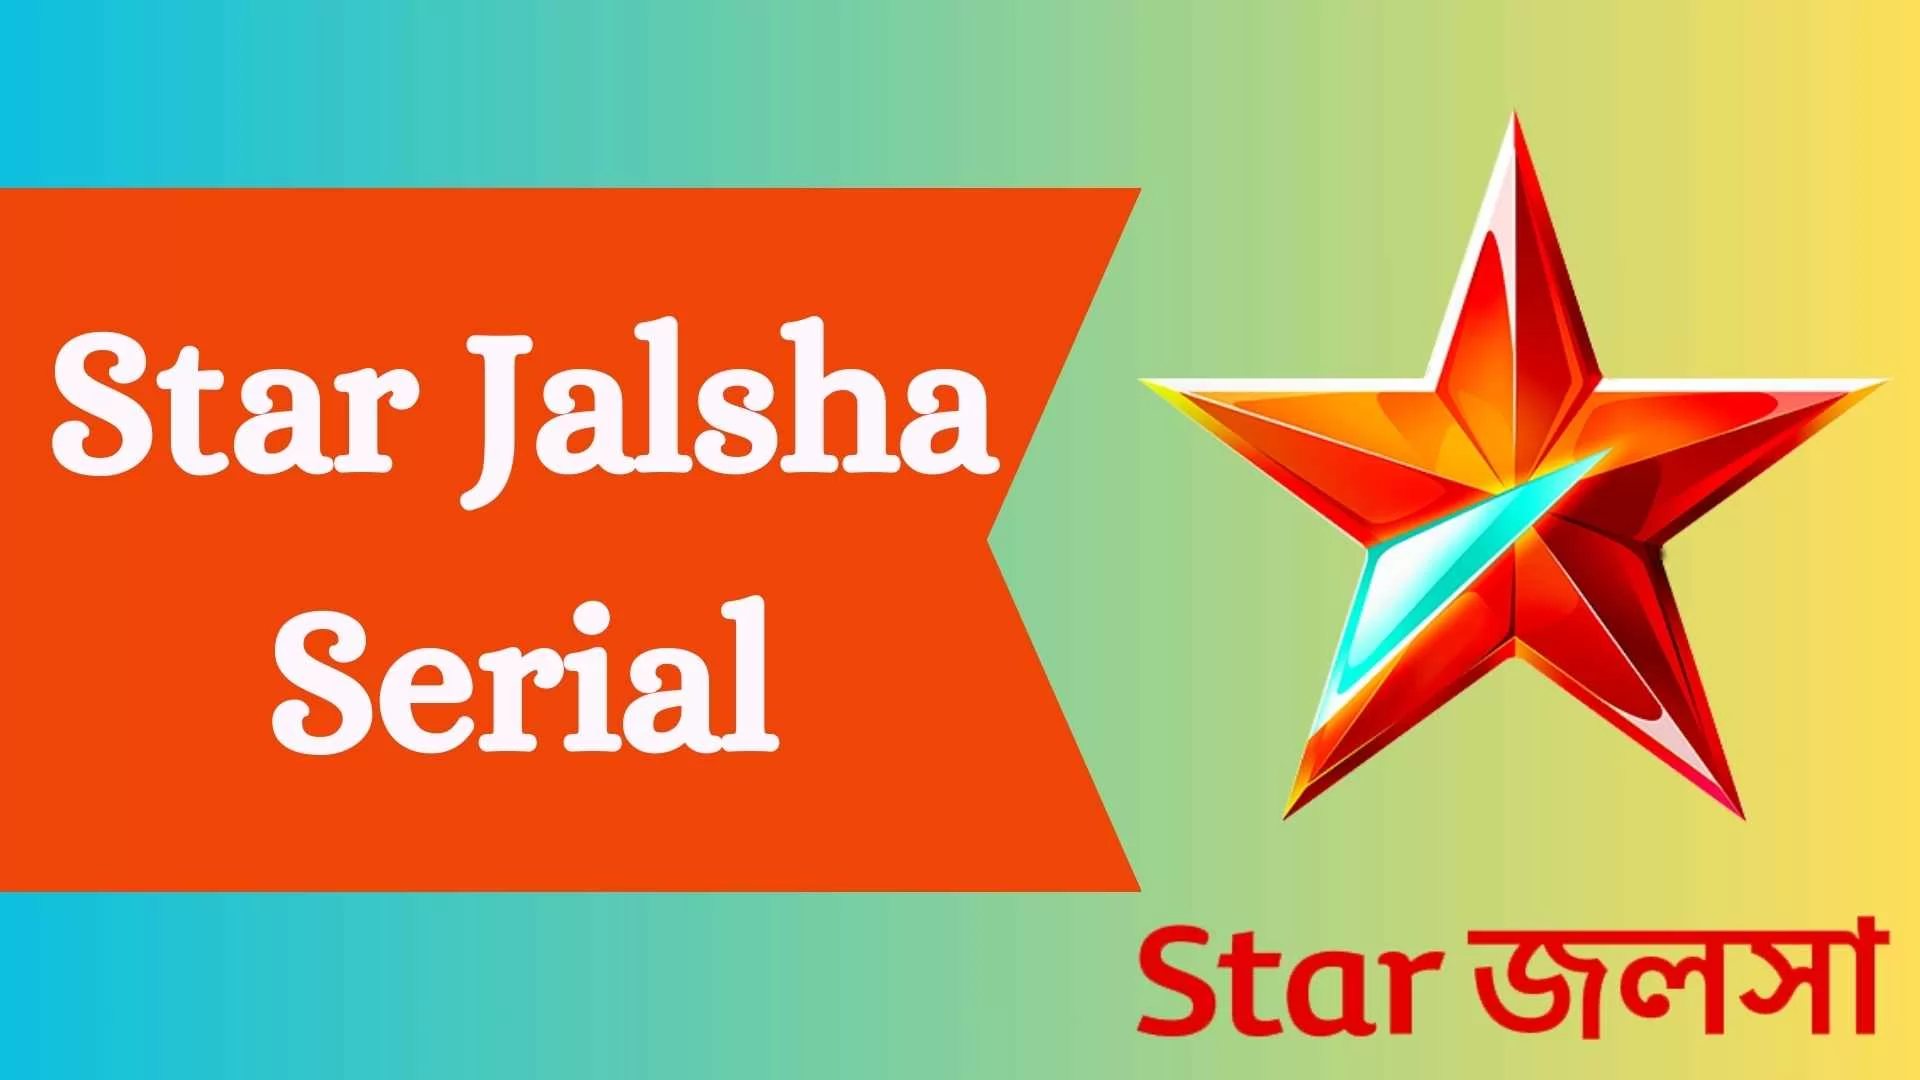 Star Jalsha Serial